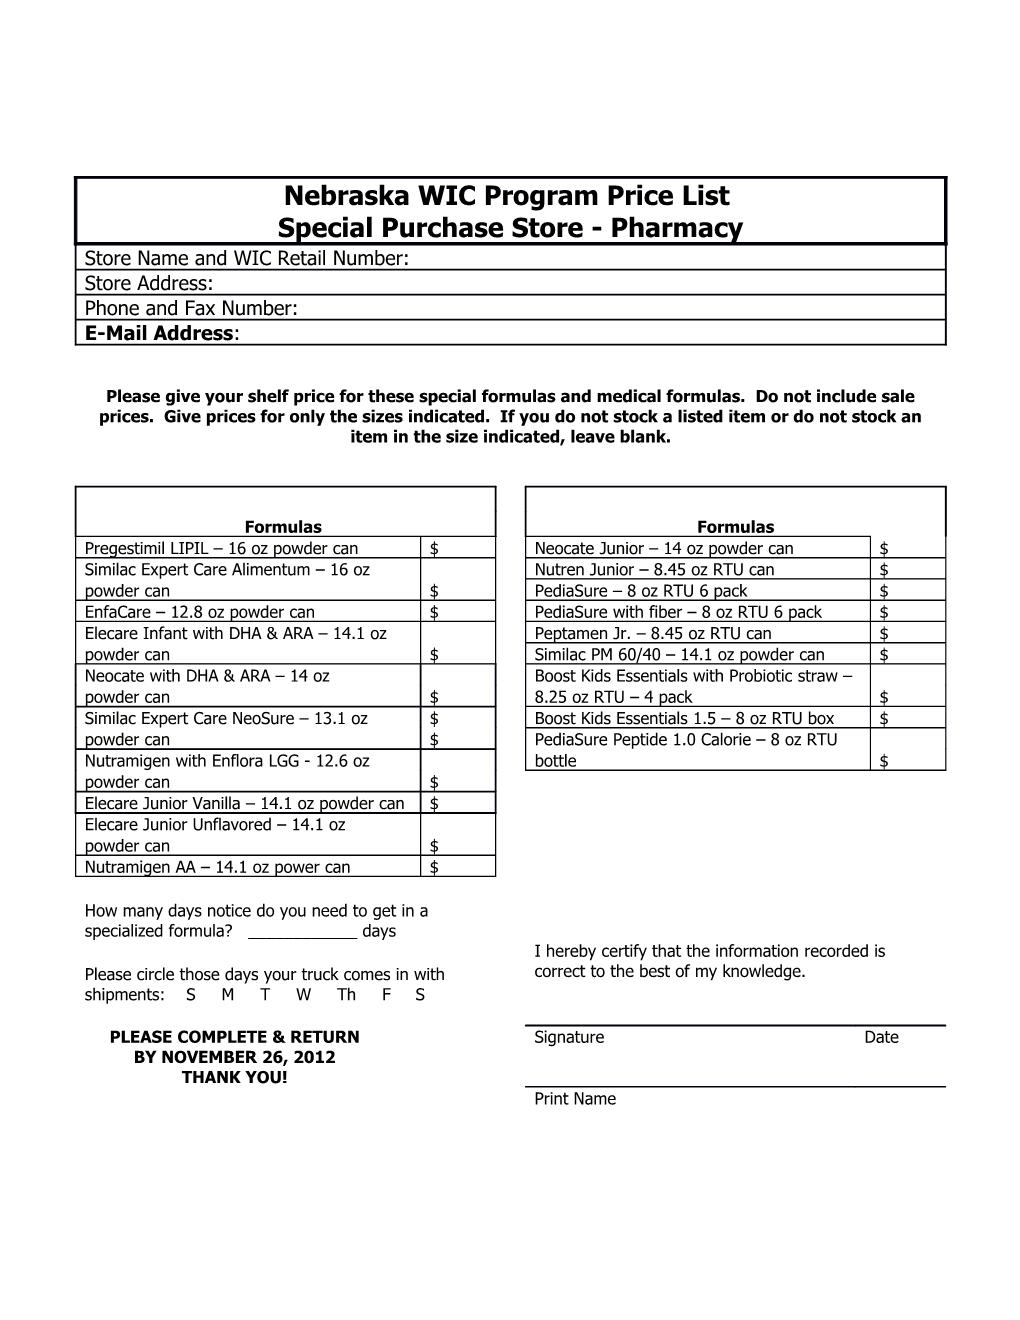 Nebraska WIC Program Price List - Grocery Stores